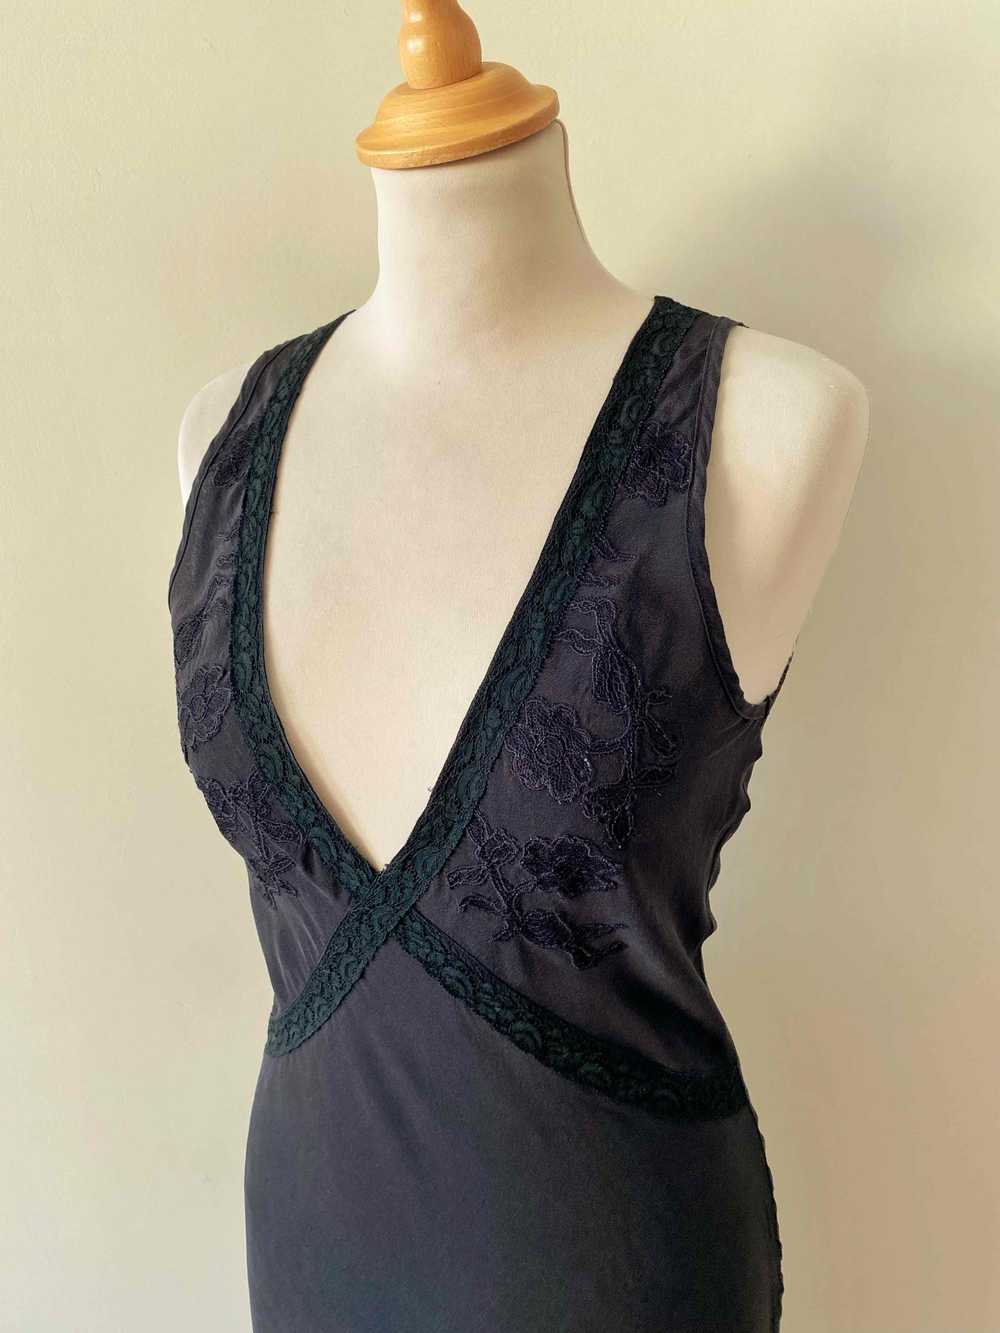 Silk slip dress - Silk slip dress, 100% black sil… - image 4